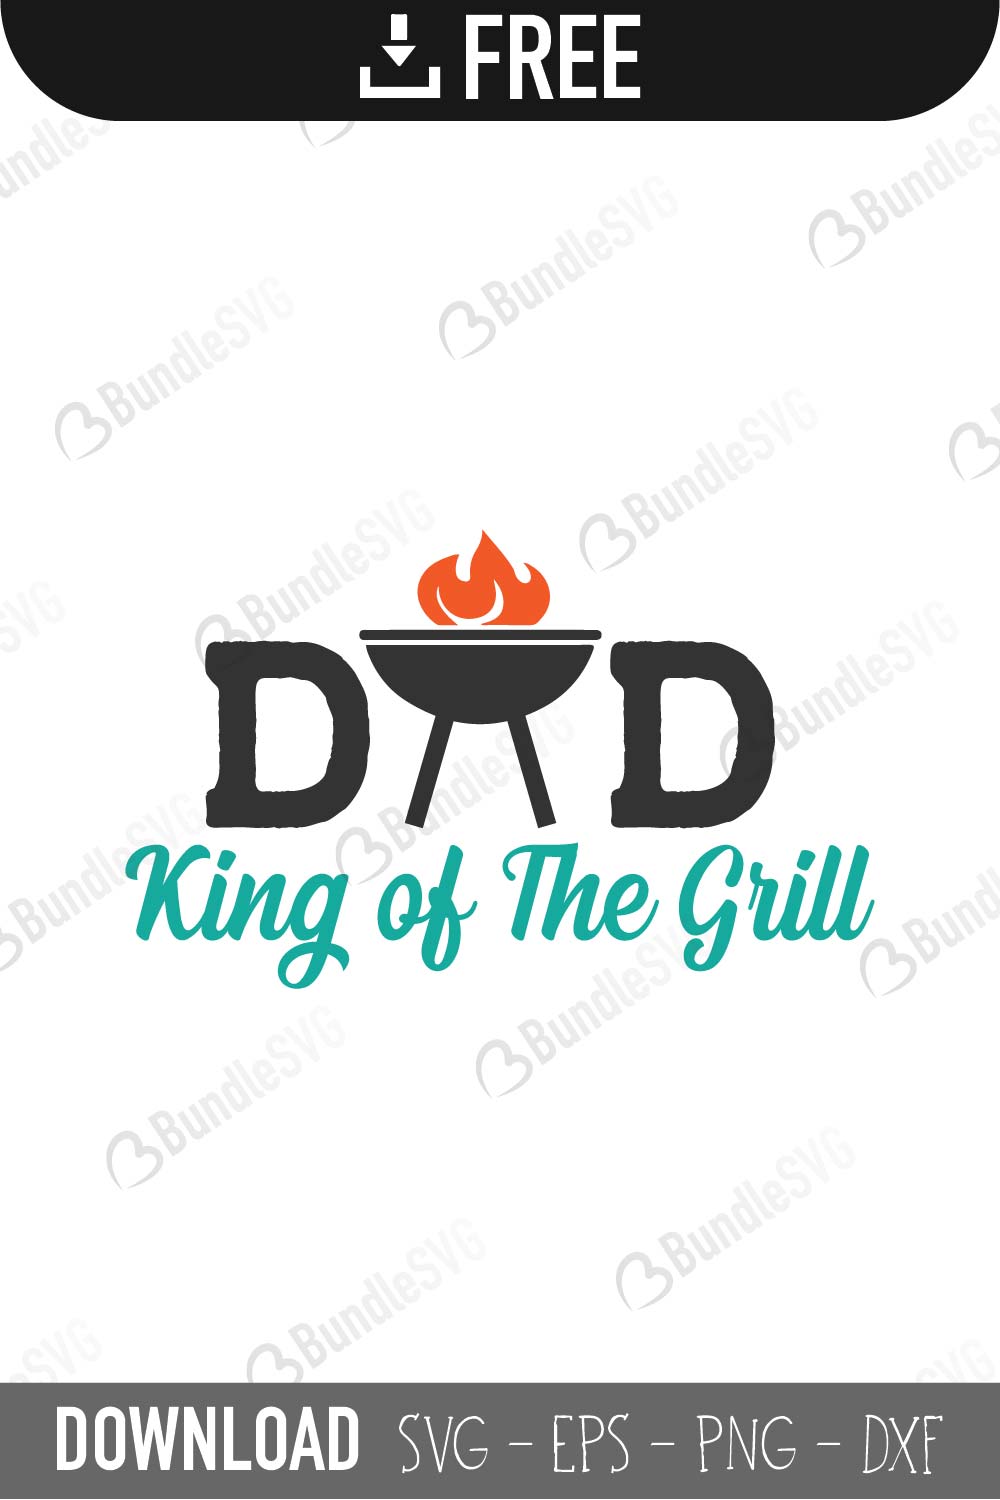 Dad King Of The Grill Svg Cut Files Free Download Bundlesvg